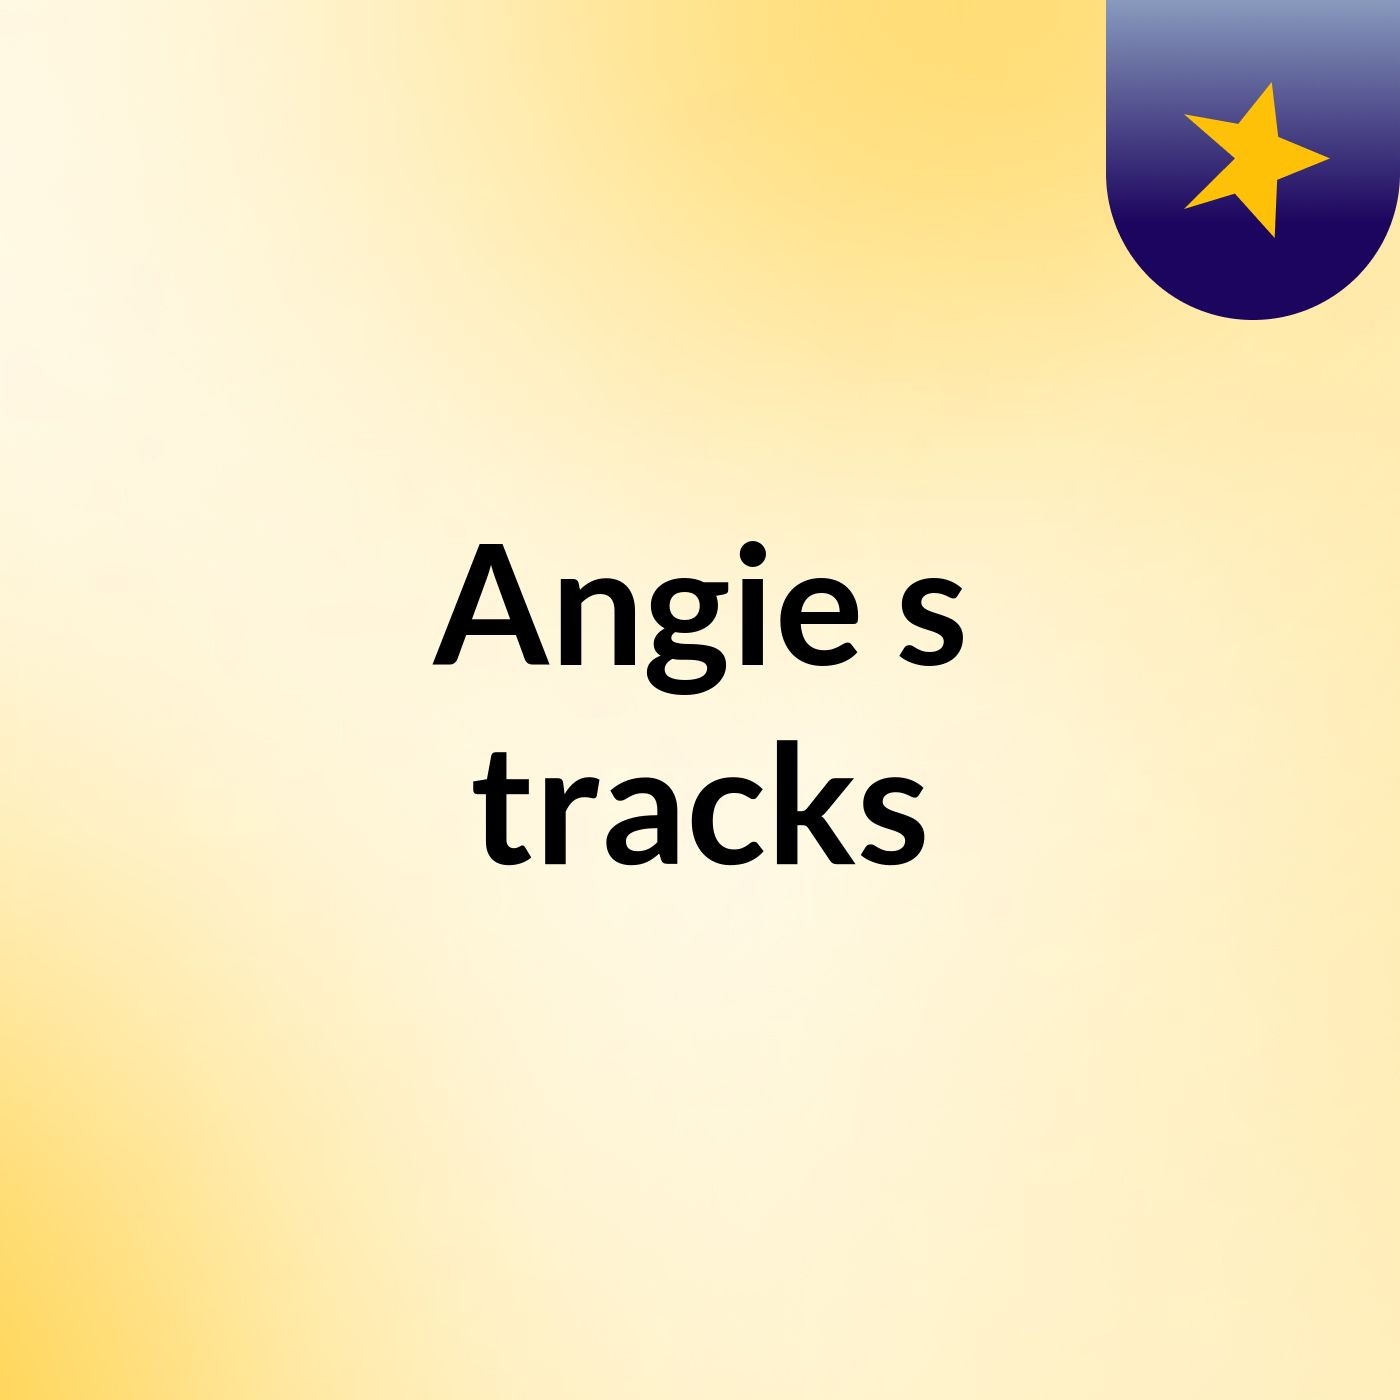 Angie's tracks